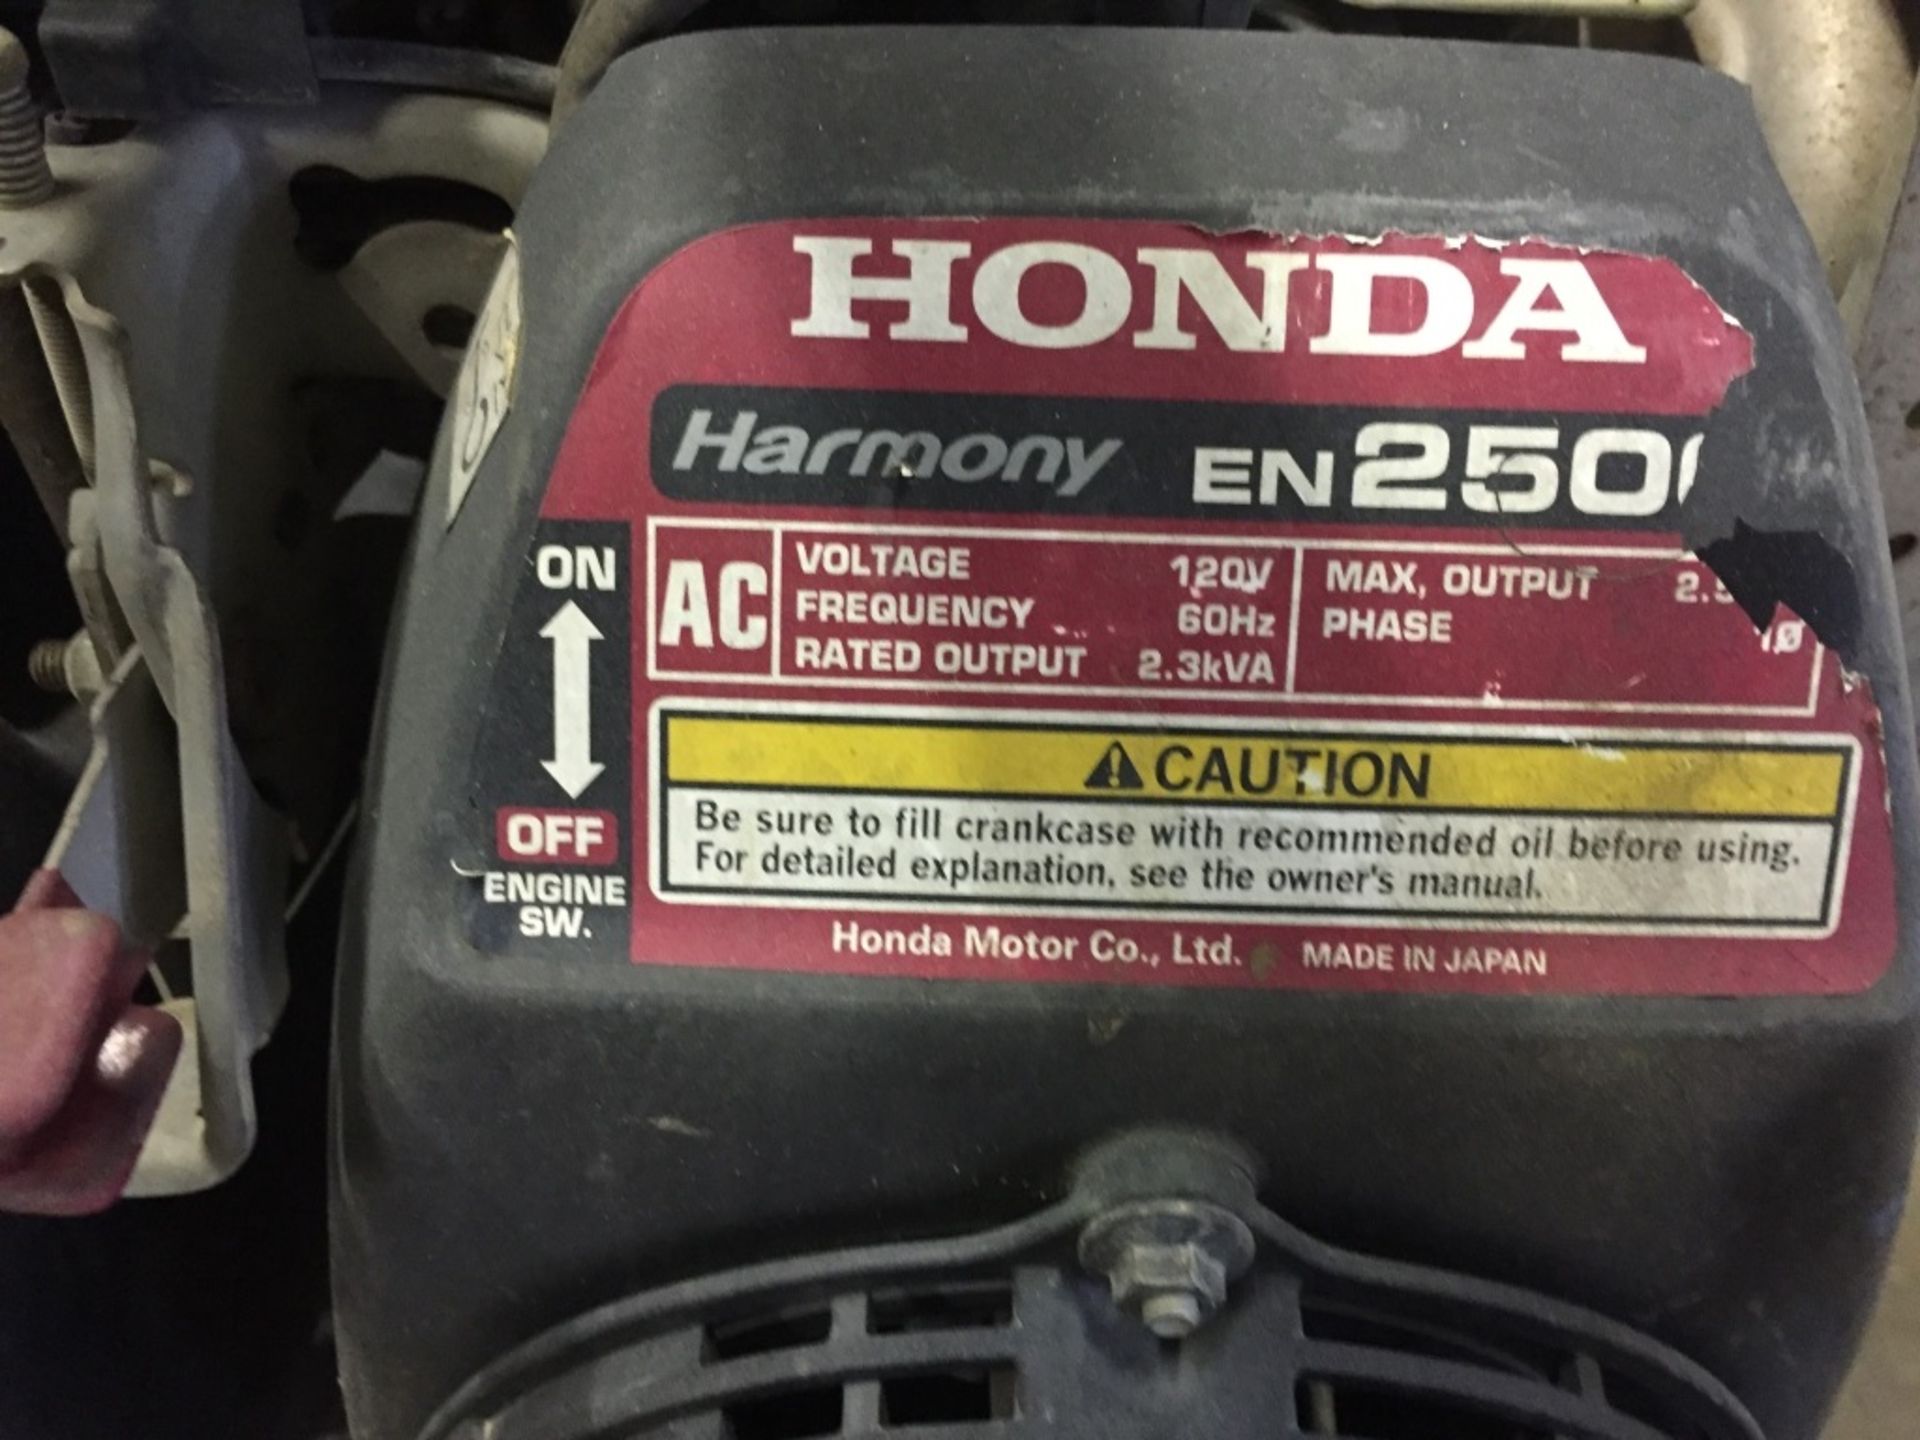 Homelite Generator w/ Honda EN2500, Location: 4127 Blairs Ferry Rd. NE Cedar Rapids, IA 52411 - Image 3 of 3